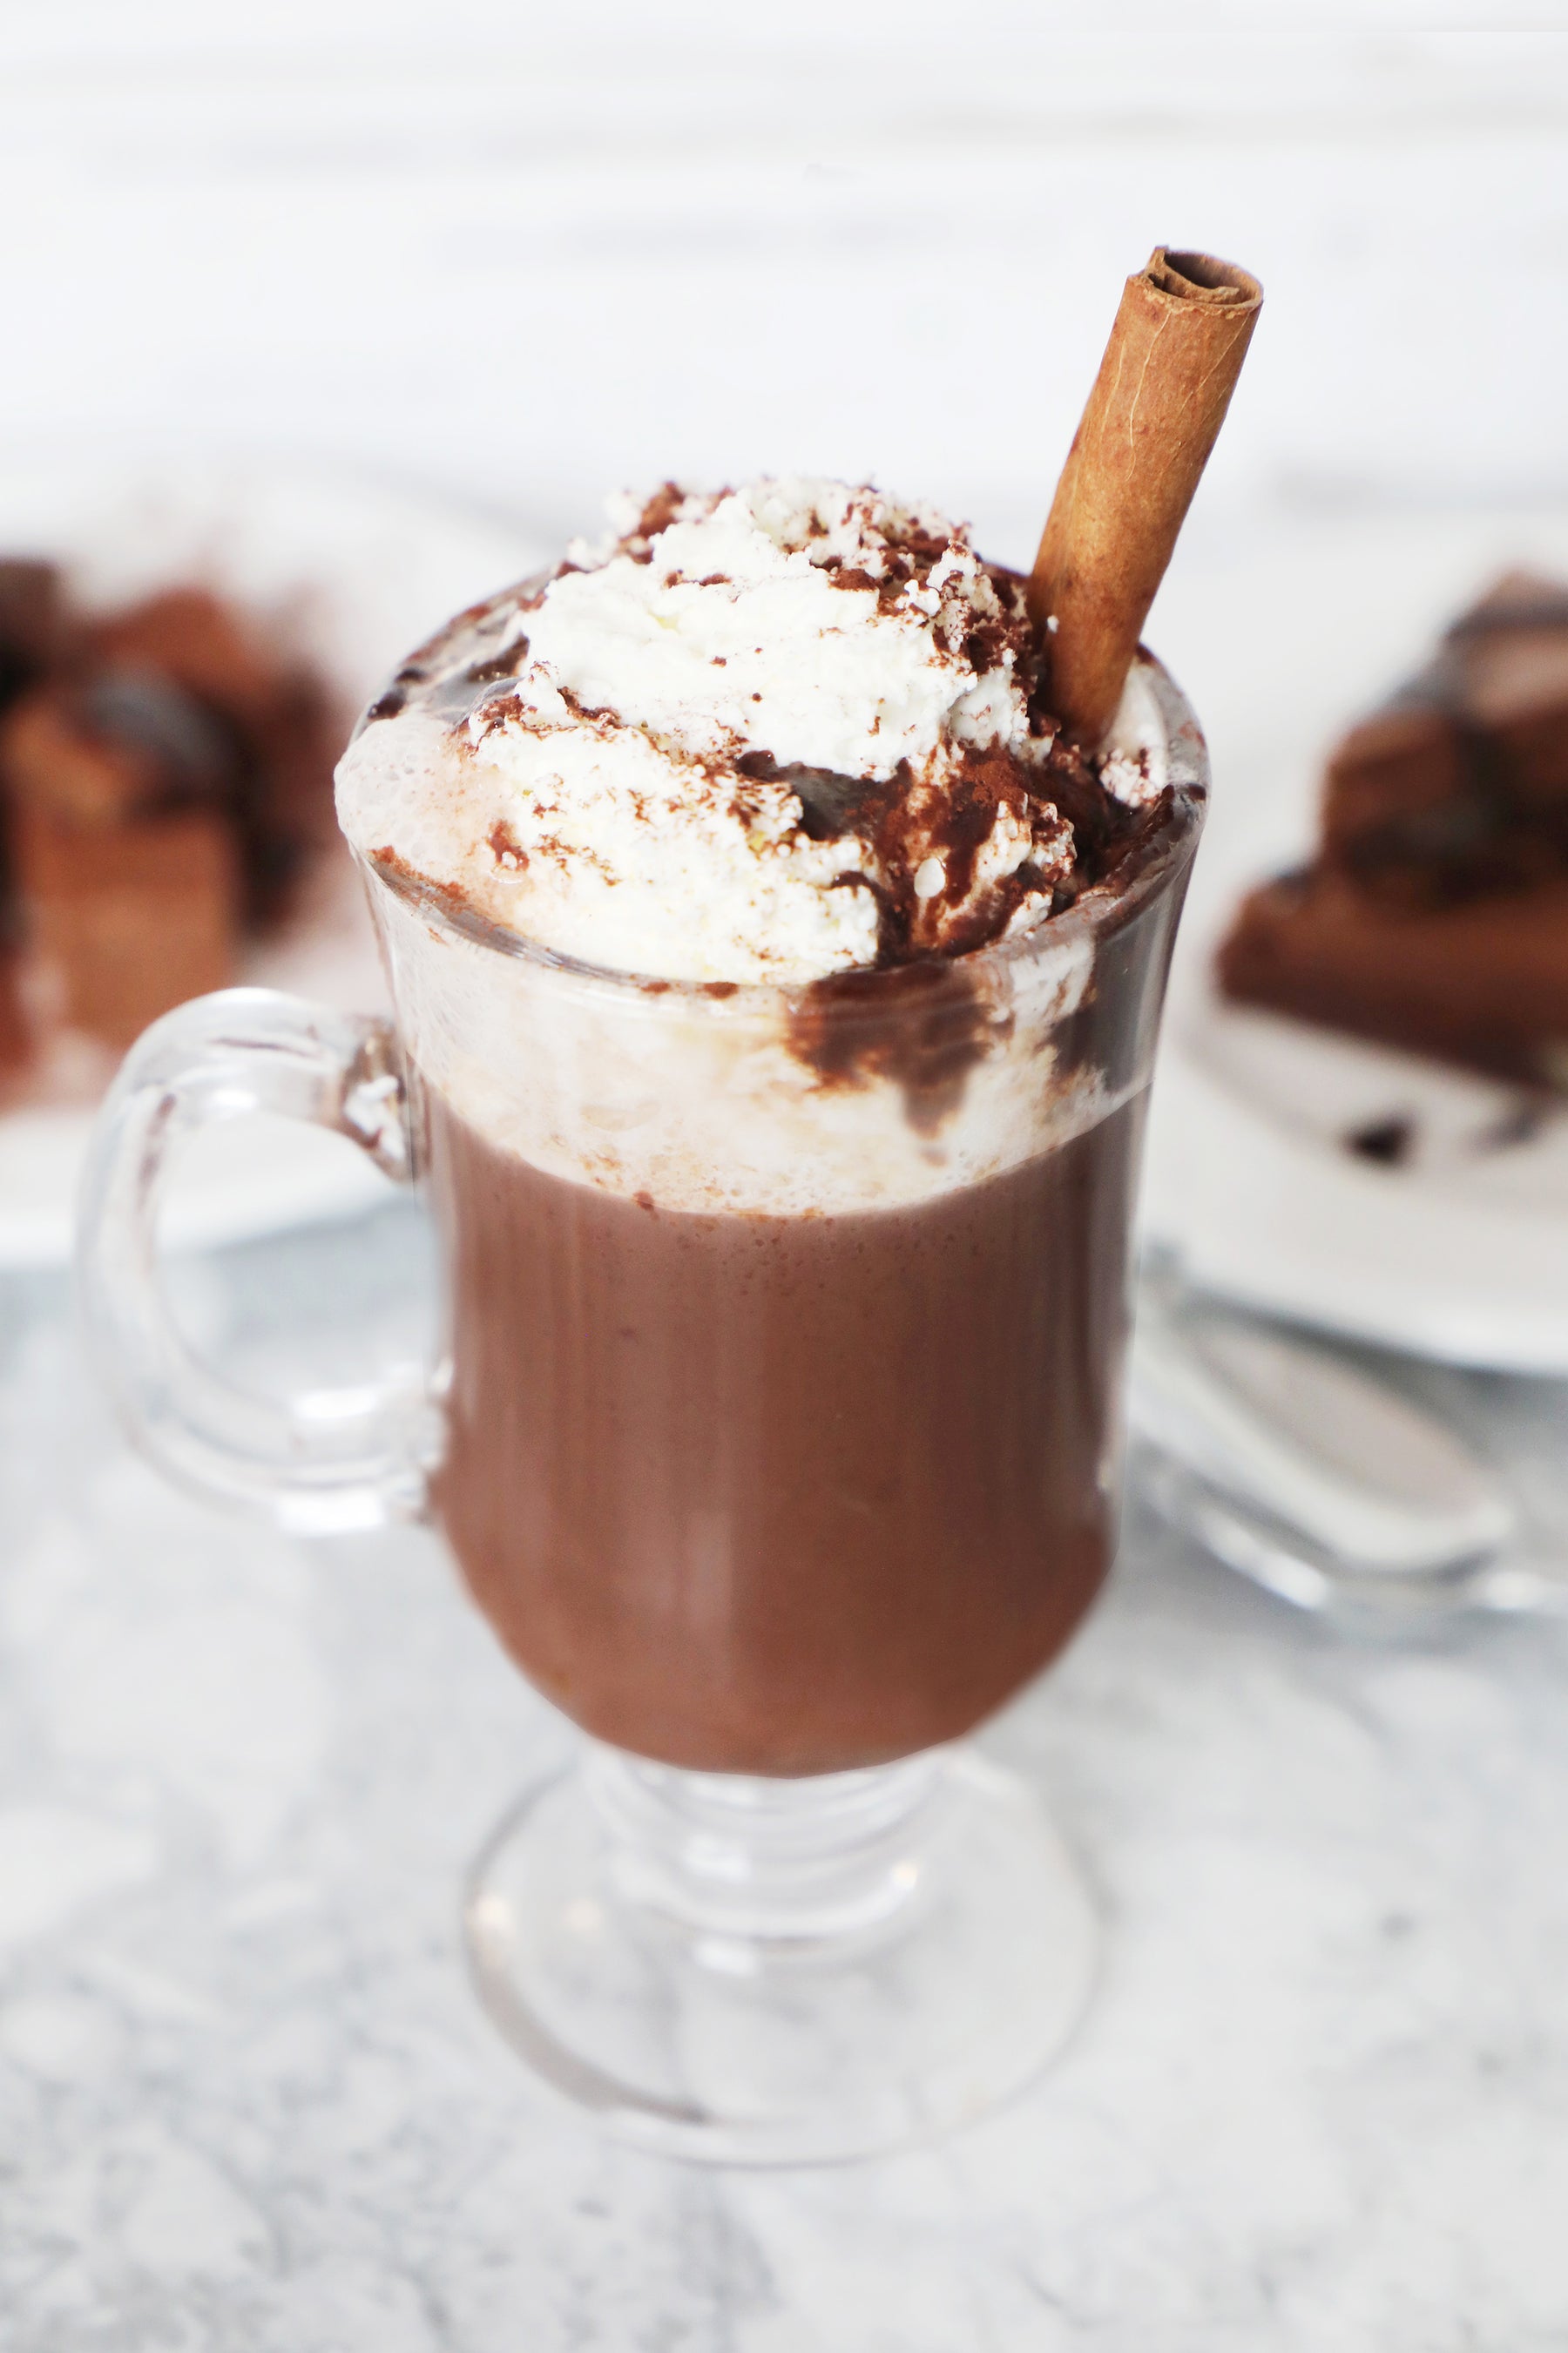 Ten ways to use Preserve Company Hot Chocolate Mix